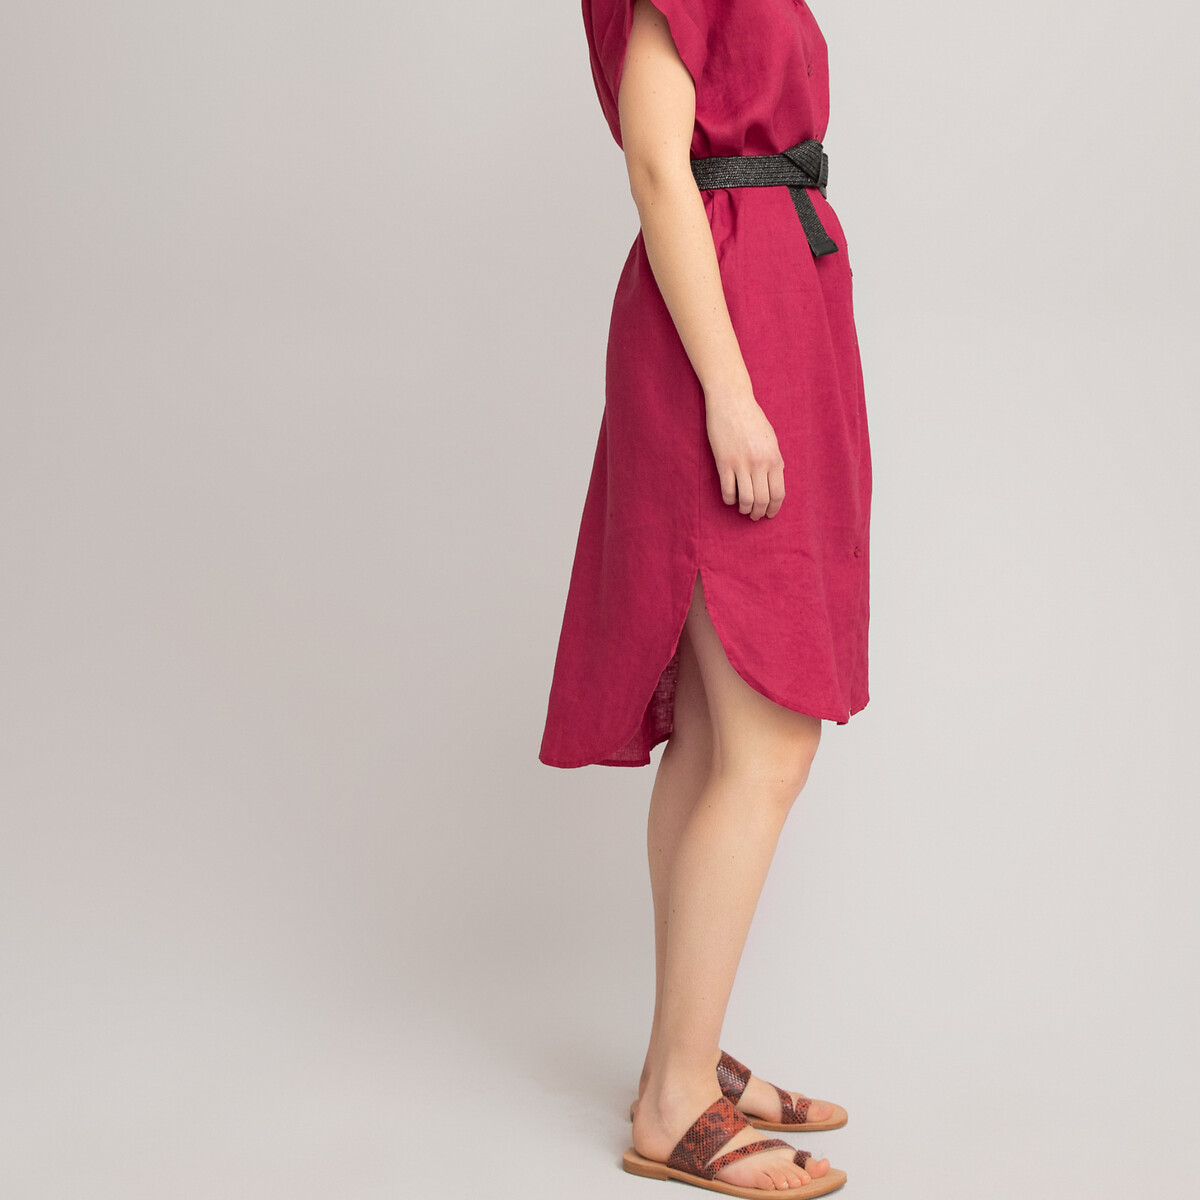 Платье-рубашка LaRedoute С короткими рукавами из льна 34 (FR) - 40 (RUS) розовый, размер 34 (FR) - 40 (RUS) С короткими рукавами из льна 34 (FR) - 40 (RUS) розовый - фото 3